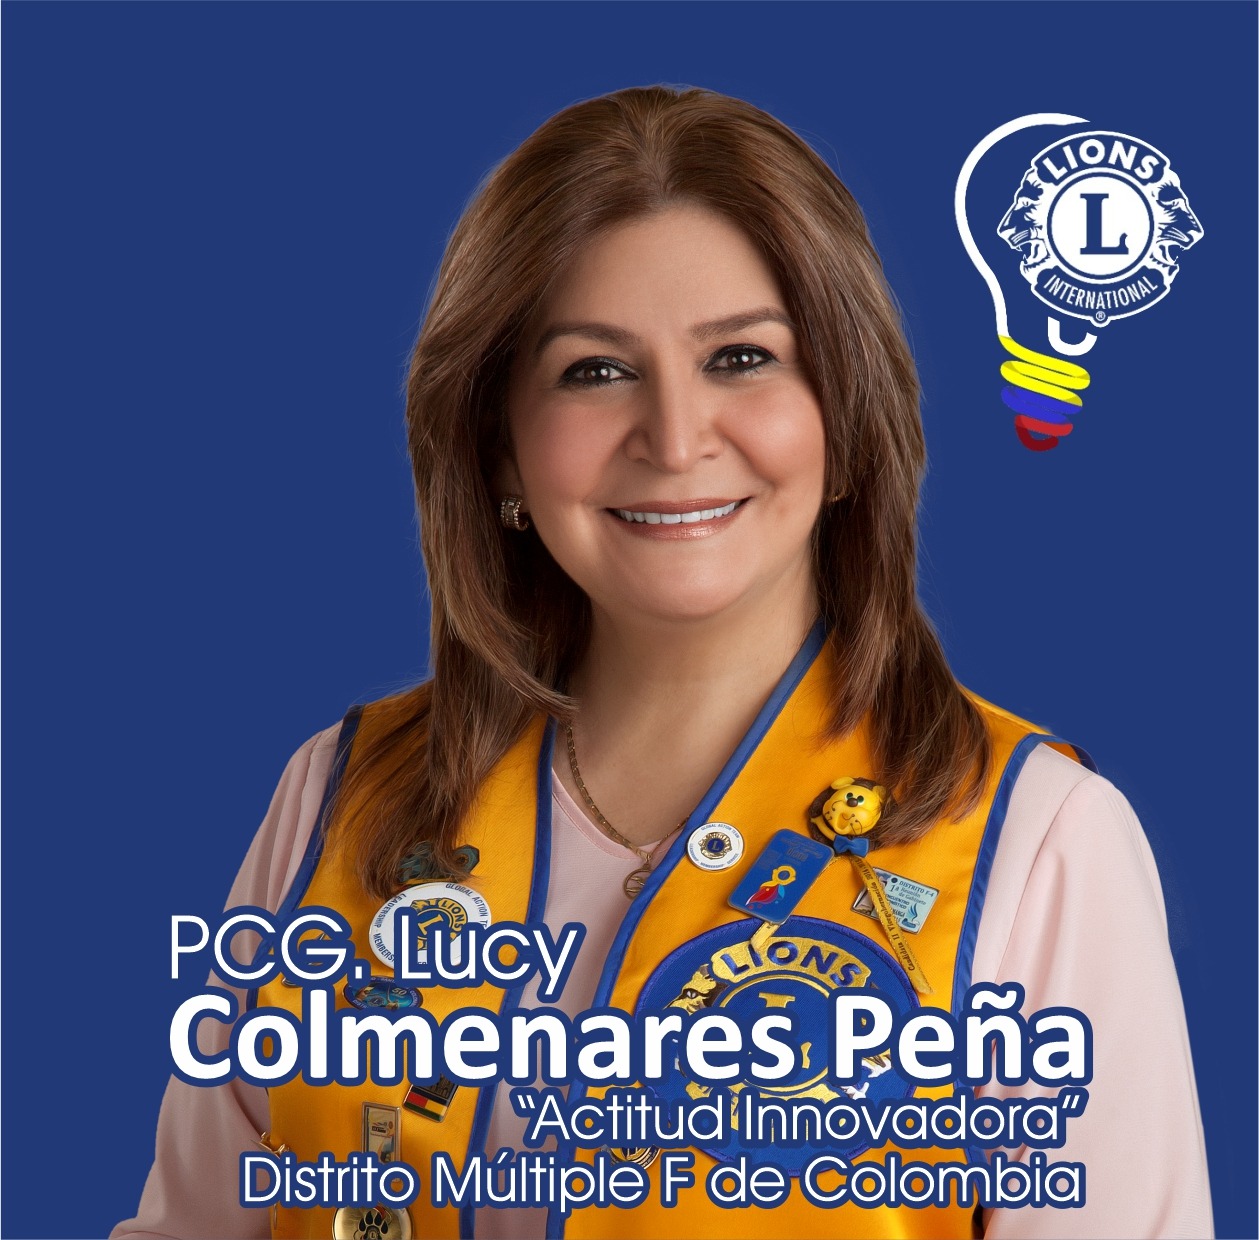 Luz Ismenia Colmenares Peña